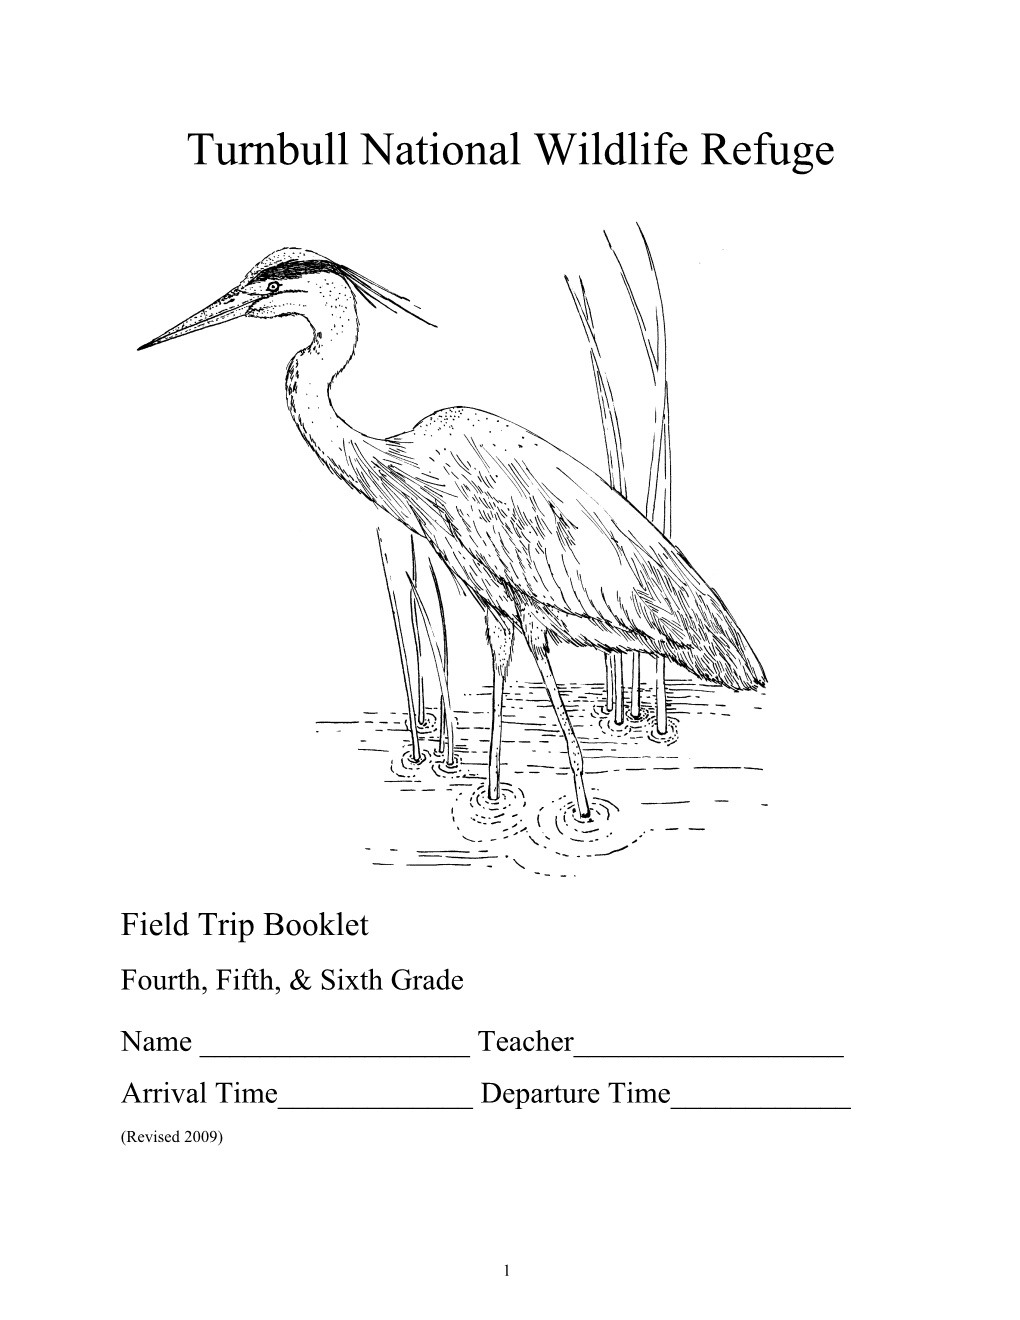 Turnbull National Wildlife Refuge